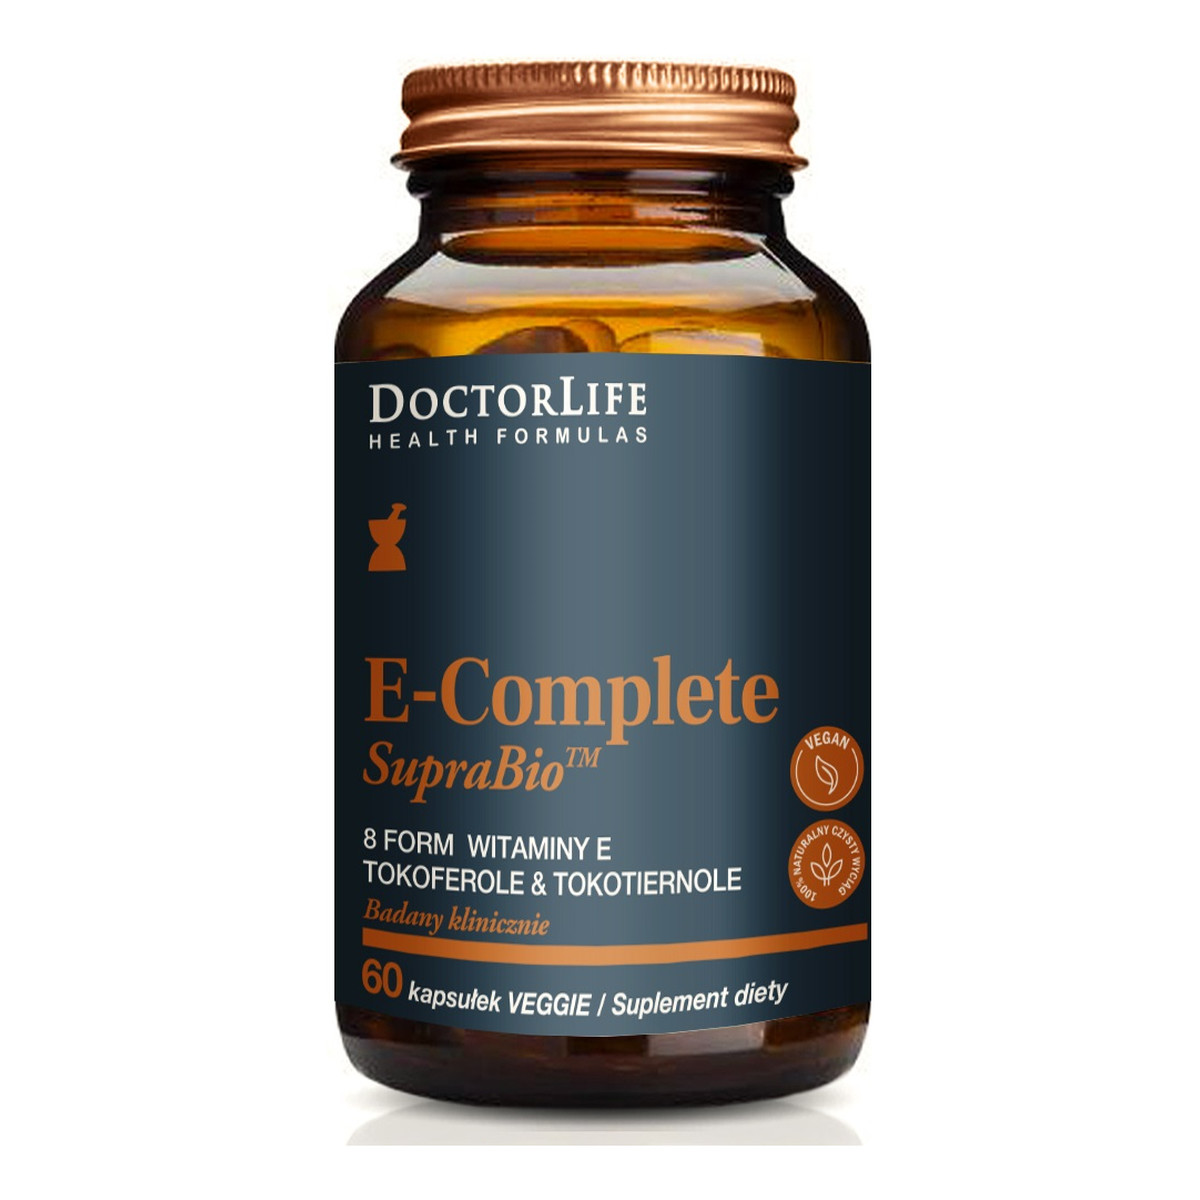 Doctor Life E-complete suprabio 8 witamin e nowej generacji suplement diety 60 kapsułek